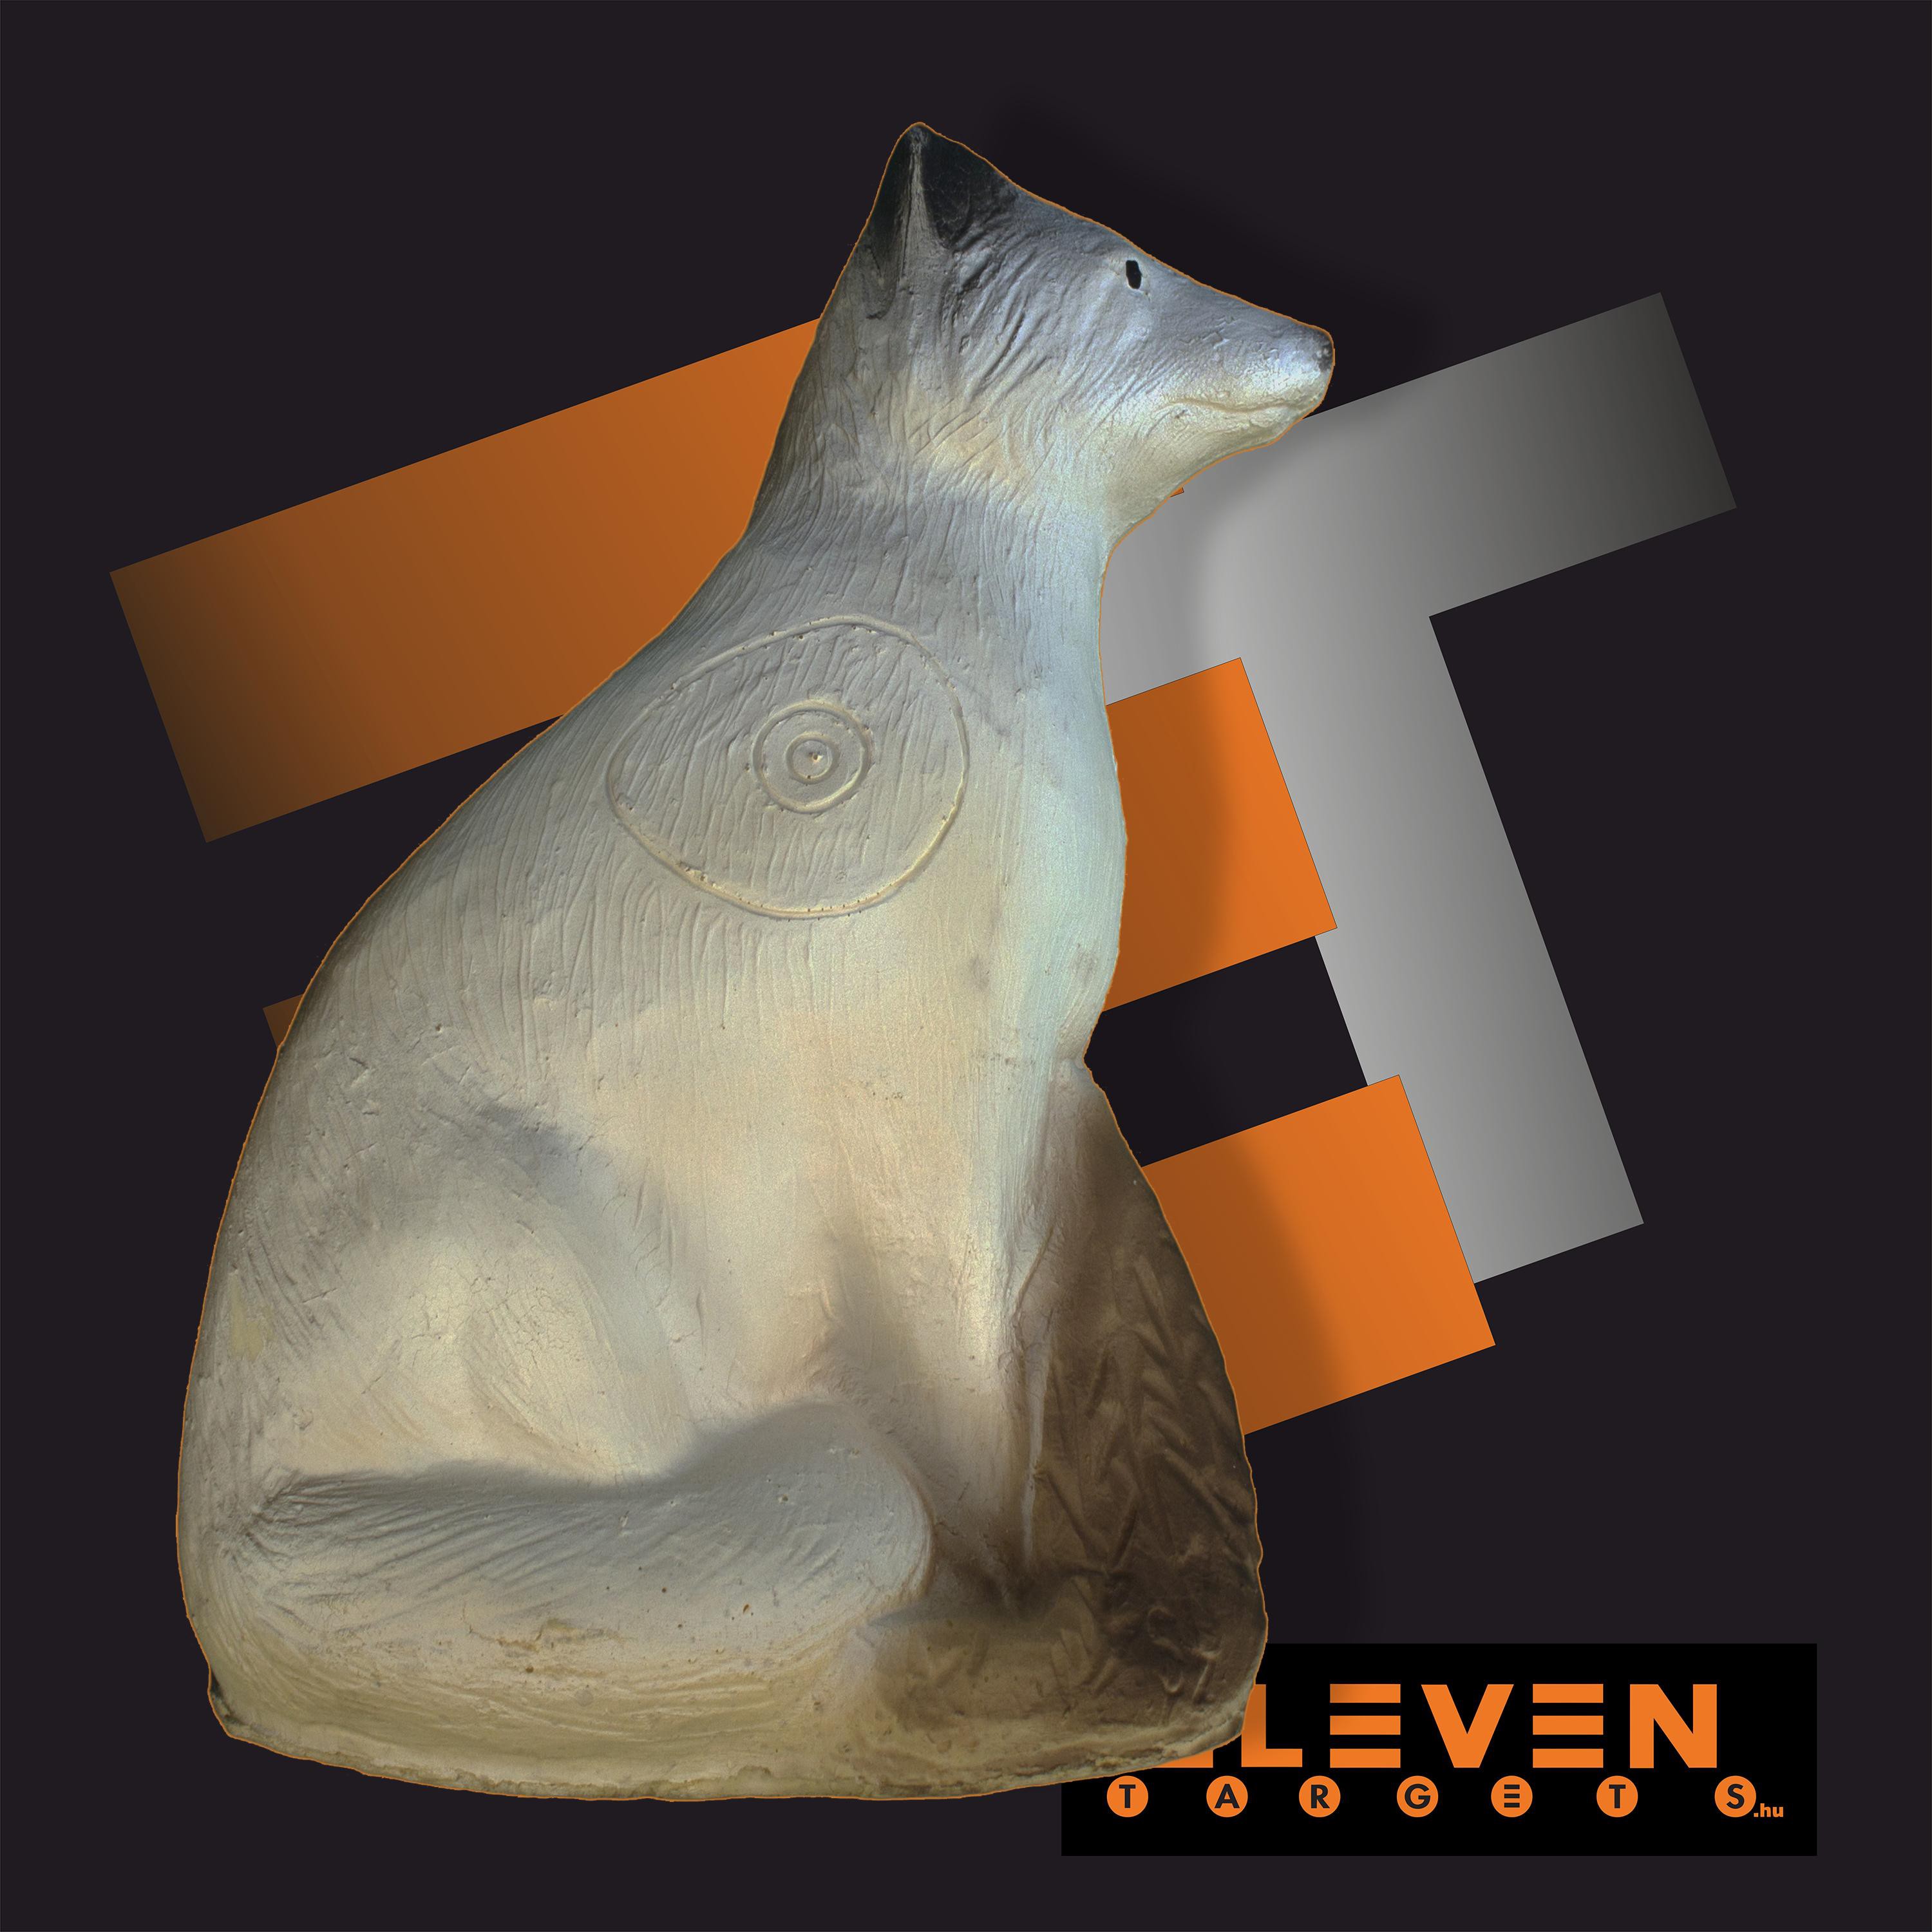  Eleven Fox E1 A arctic white 3D Target